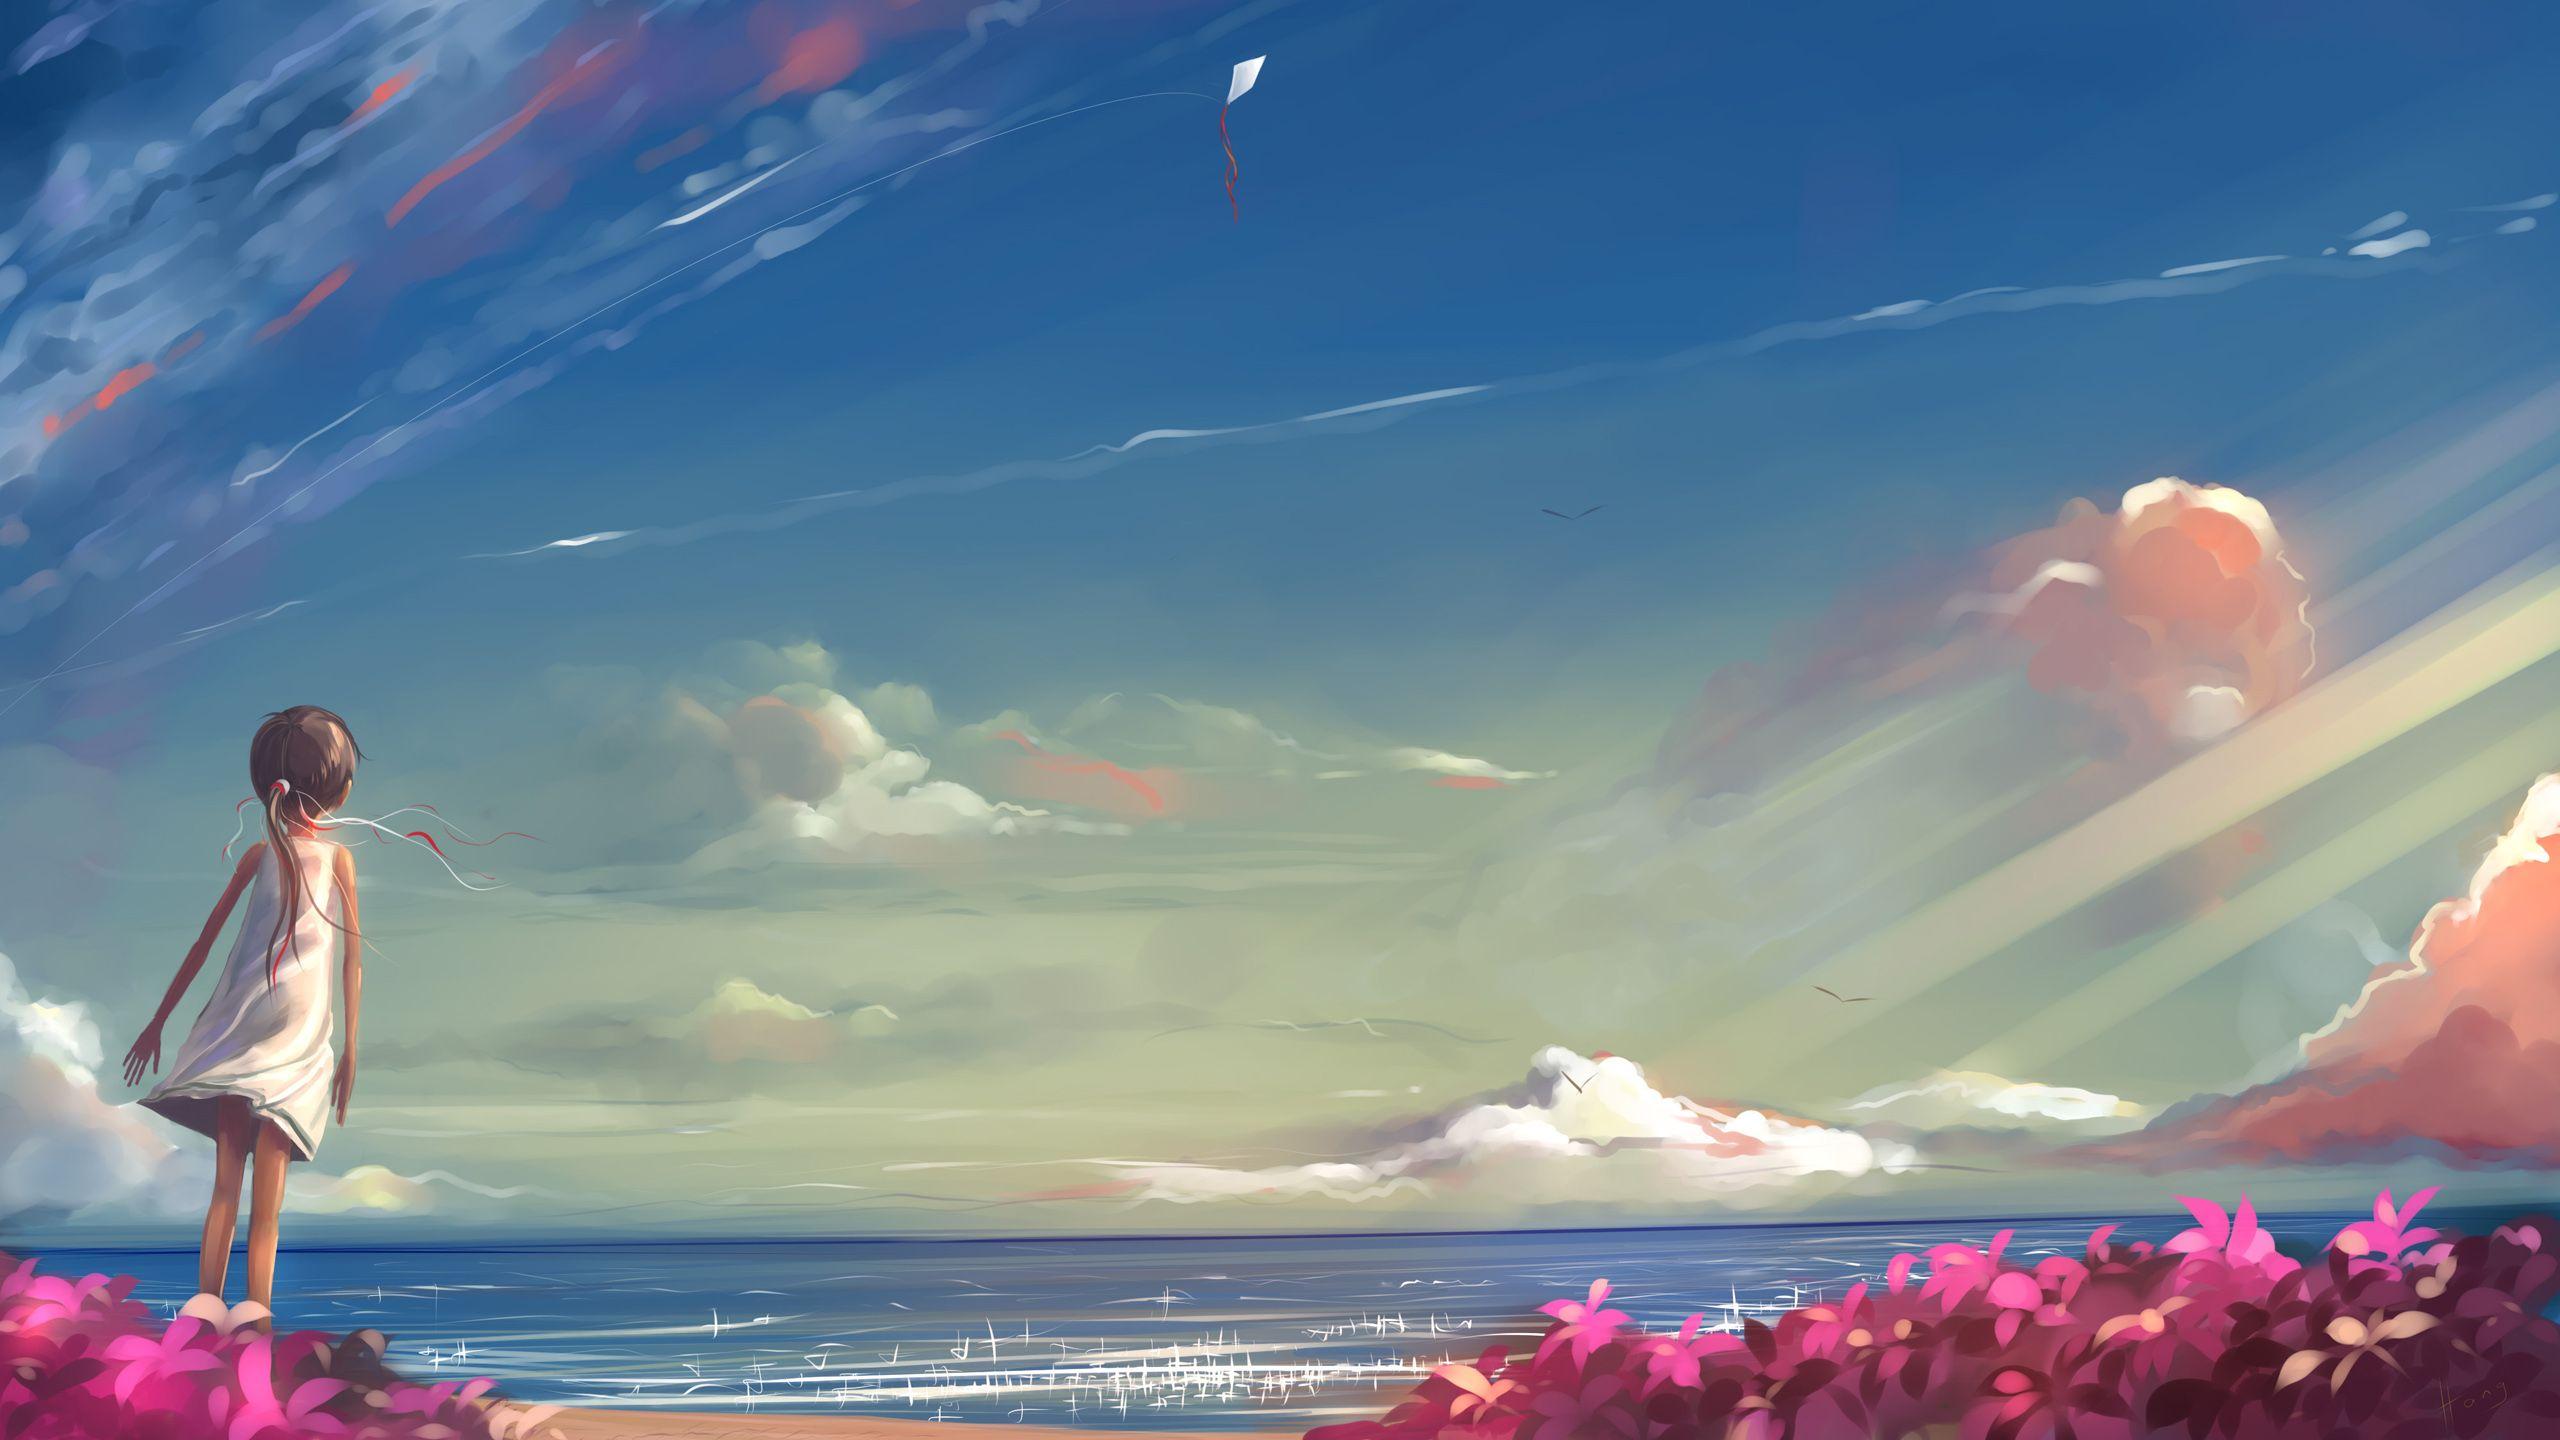 Anime Drawing Clouds Kite Ocean Beach Child original sky